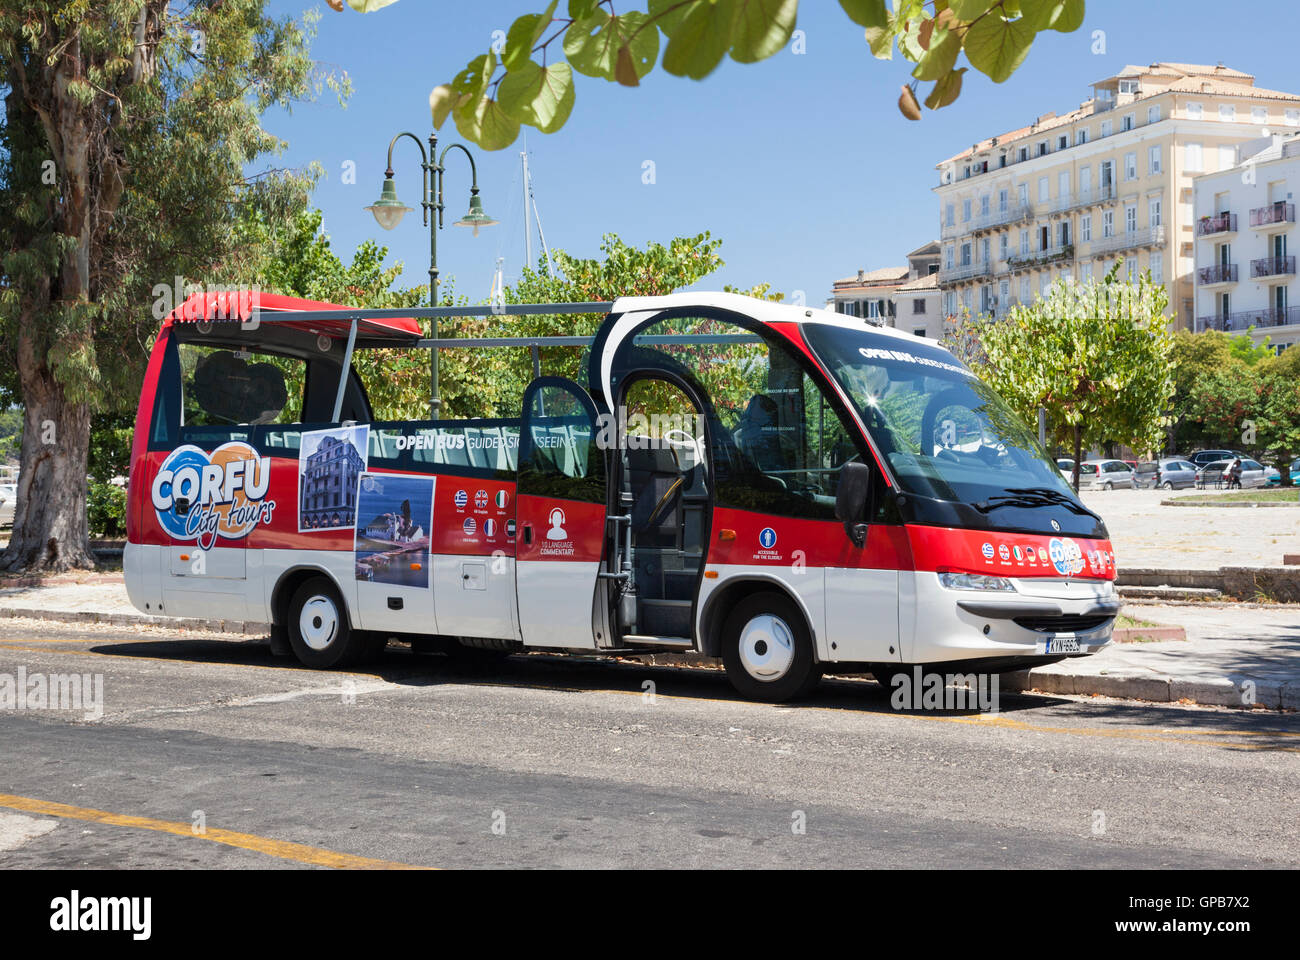 Tourist bus, Corfu town, Corfu, Greece Stock Photo